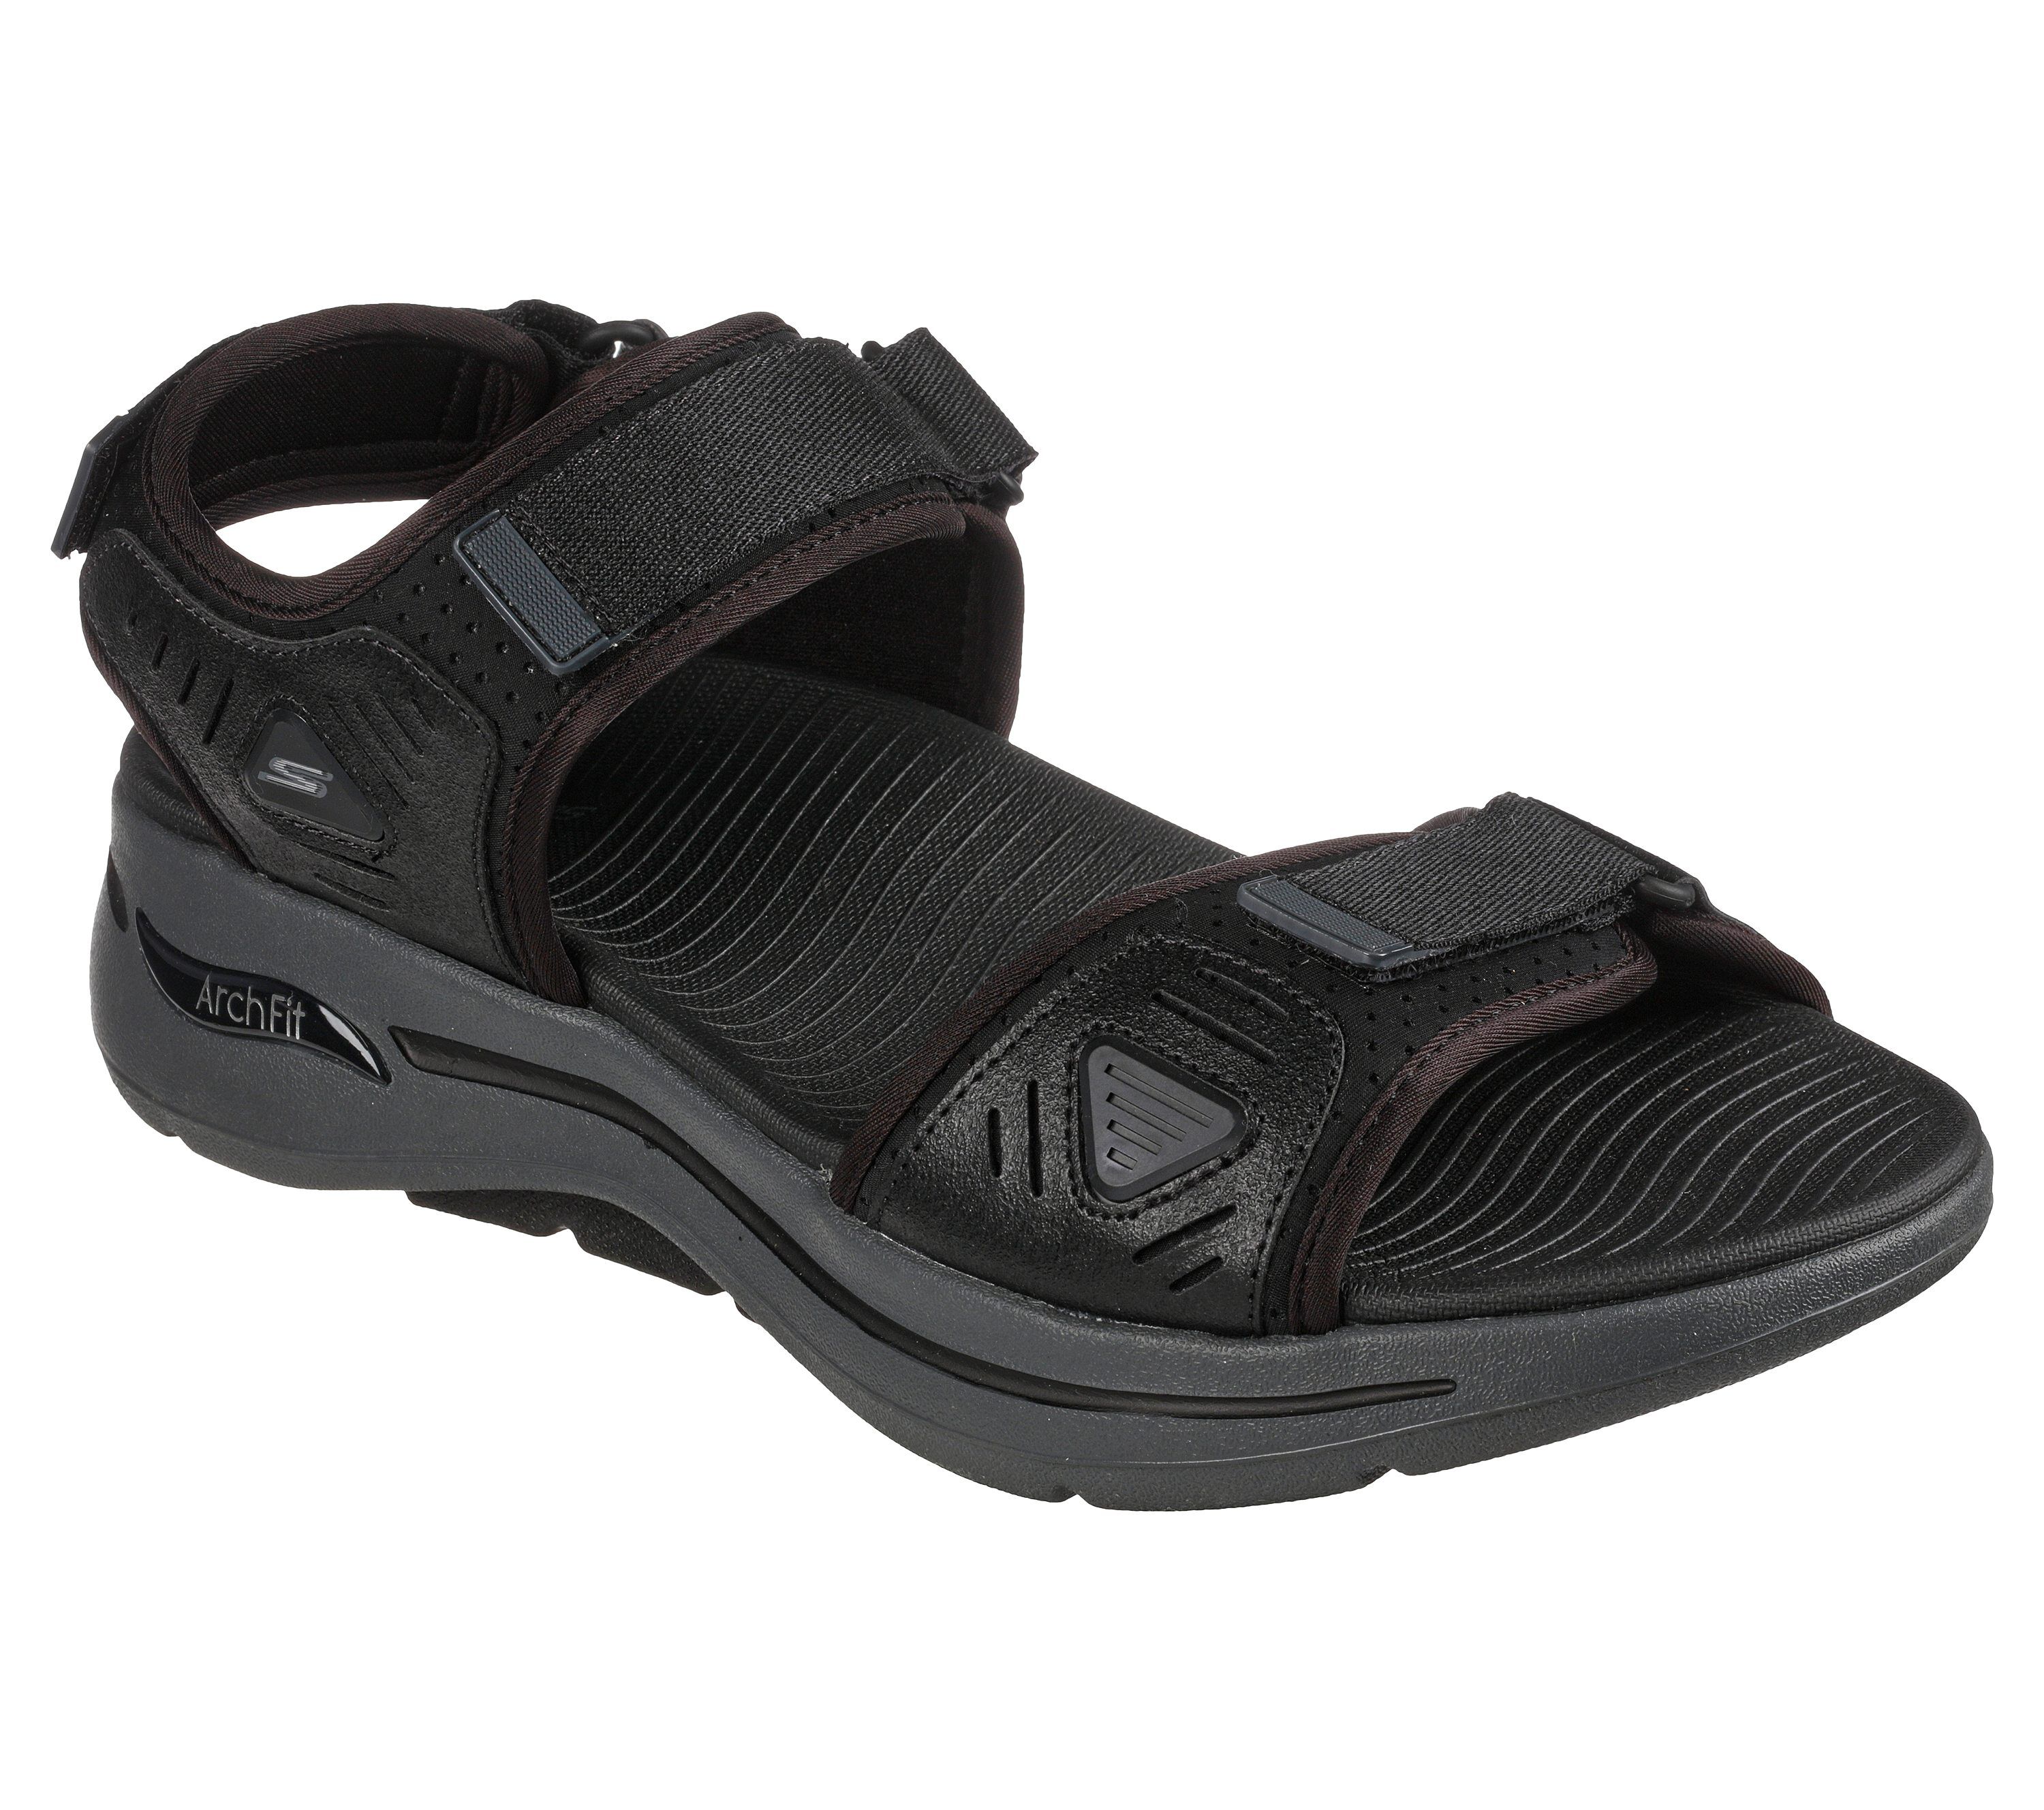 skechers sandals for men